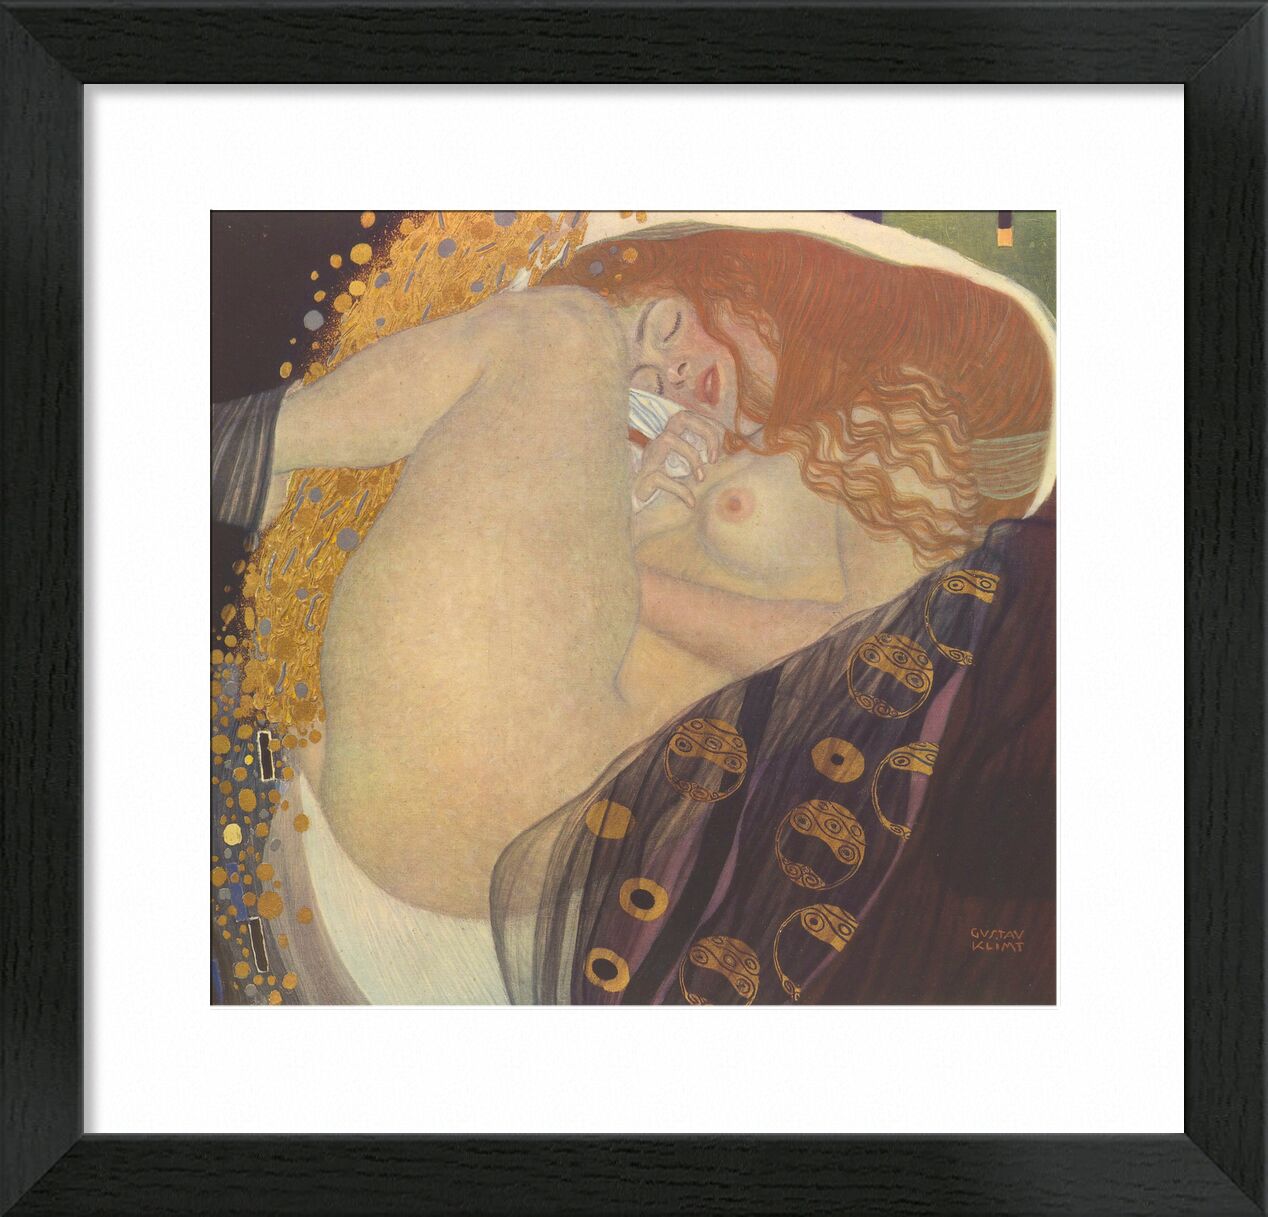 Danae I - Gustav Klimt desde Bellas artes, Prodi Art, KLIMT, sueño, acostar, noche, hoja, pelirrojo, desnudo, mujer, pintura, art nouveau